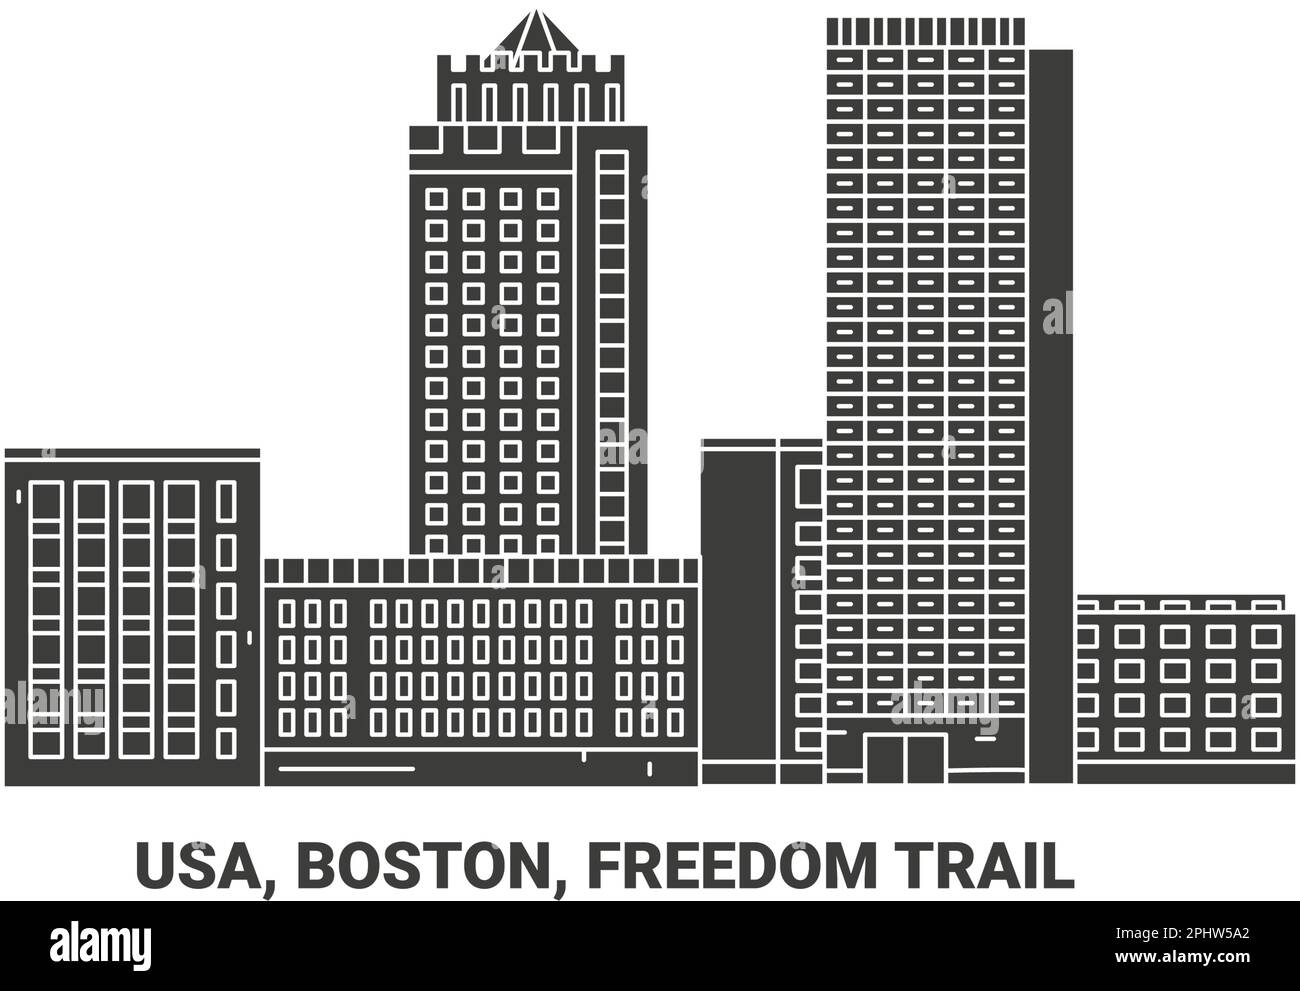 Usa, Boston, Freedom Trail, travel landmark vector illustration Stock Vector